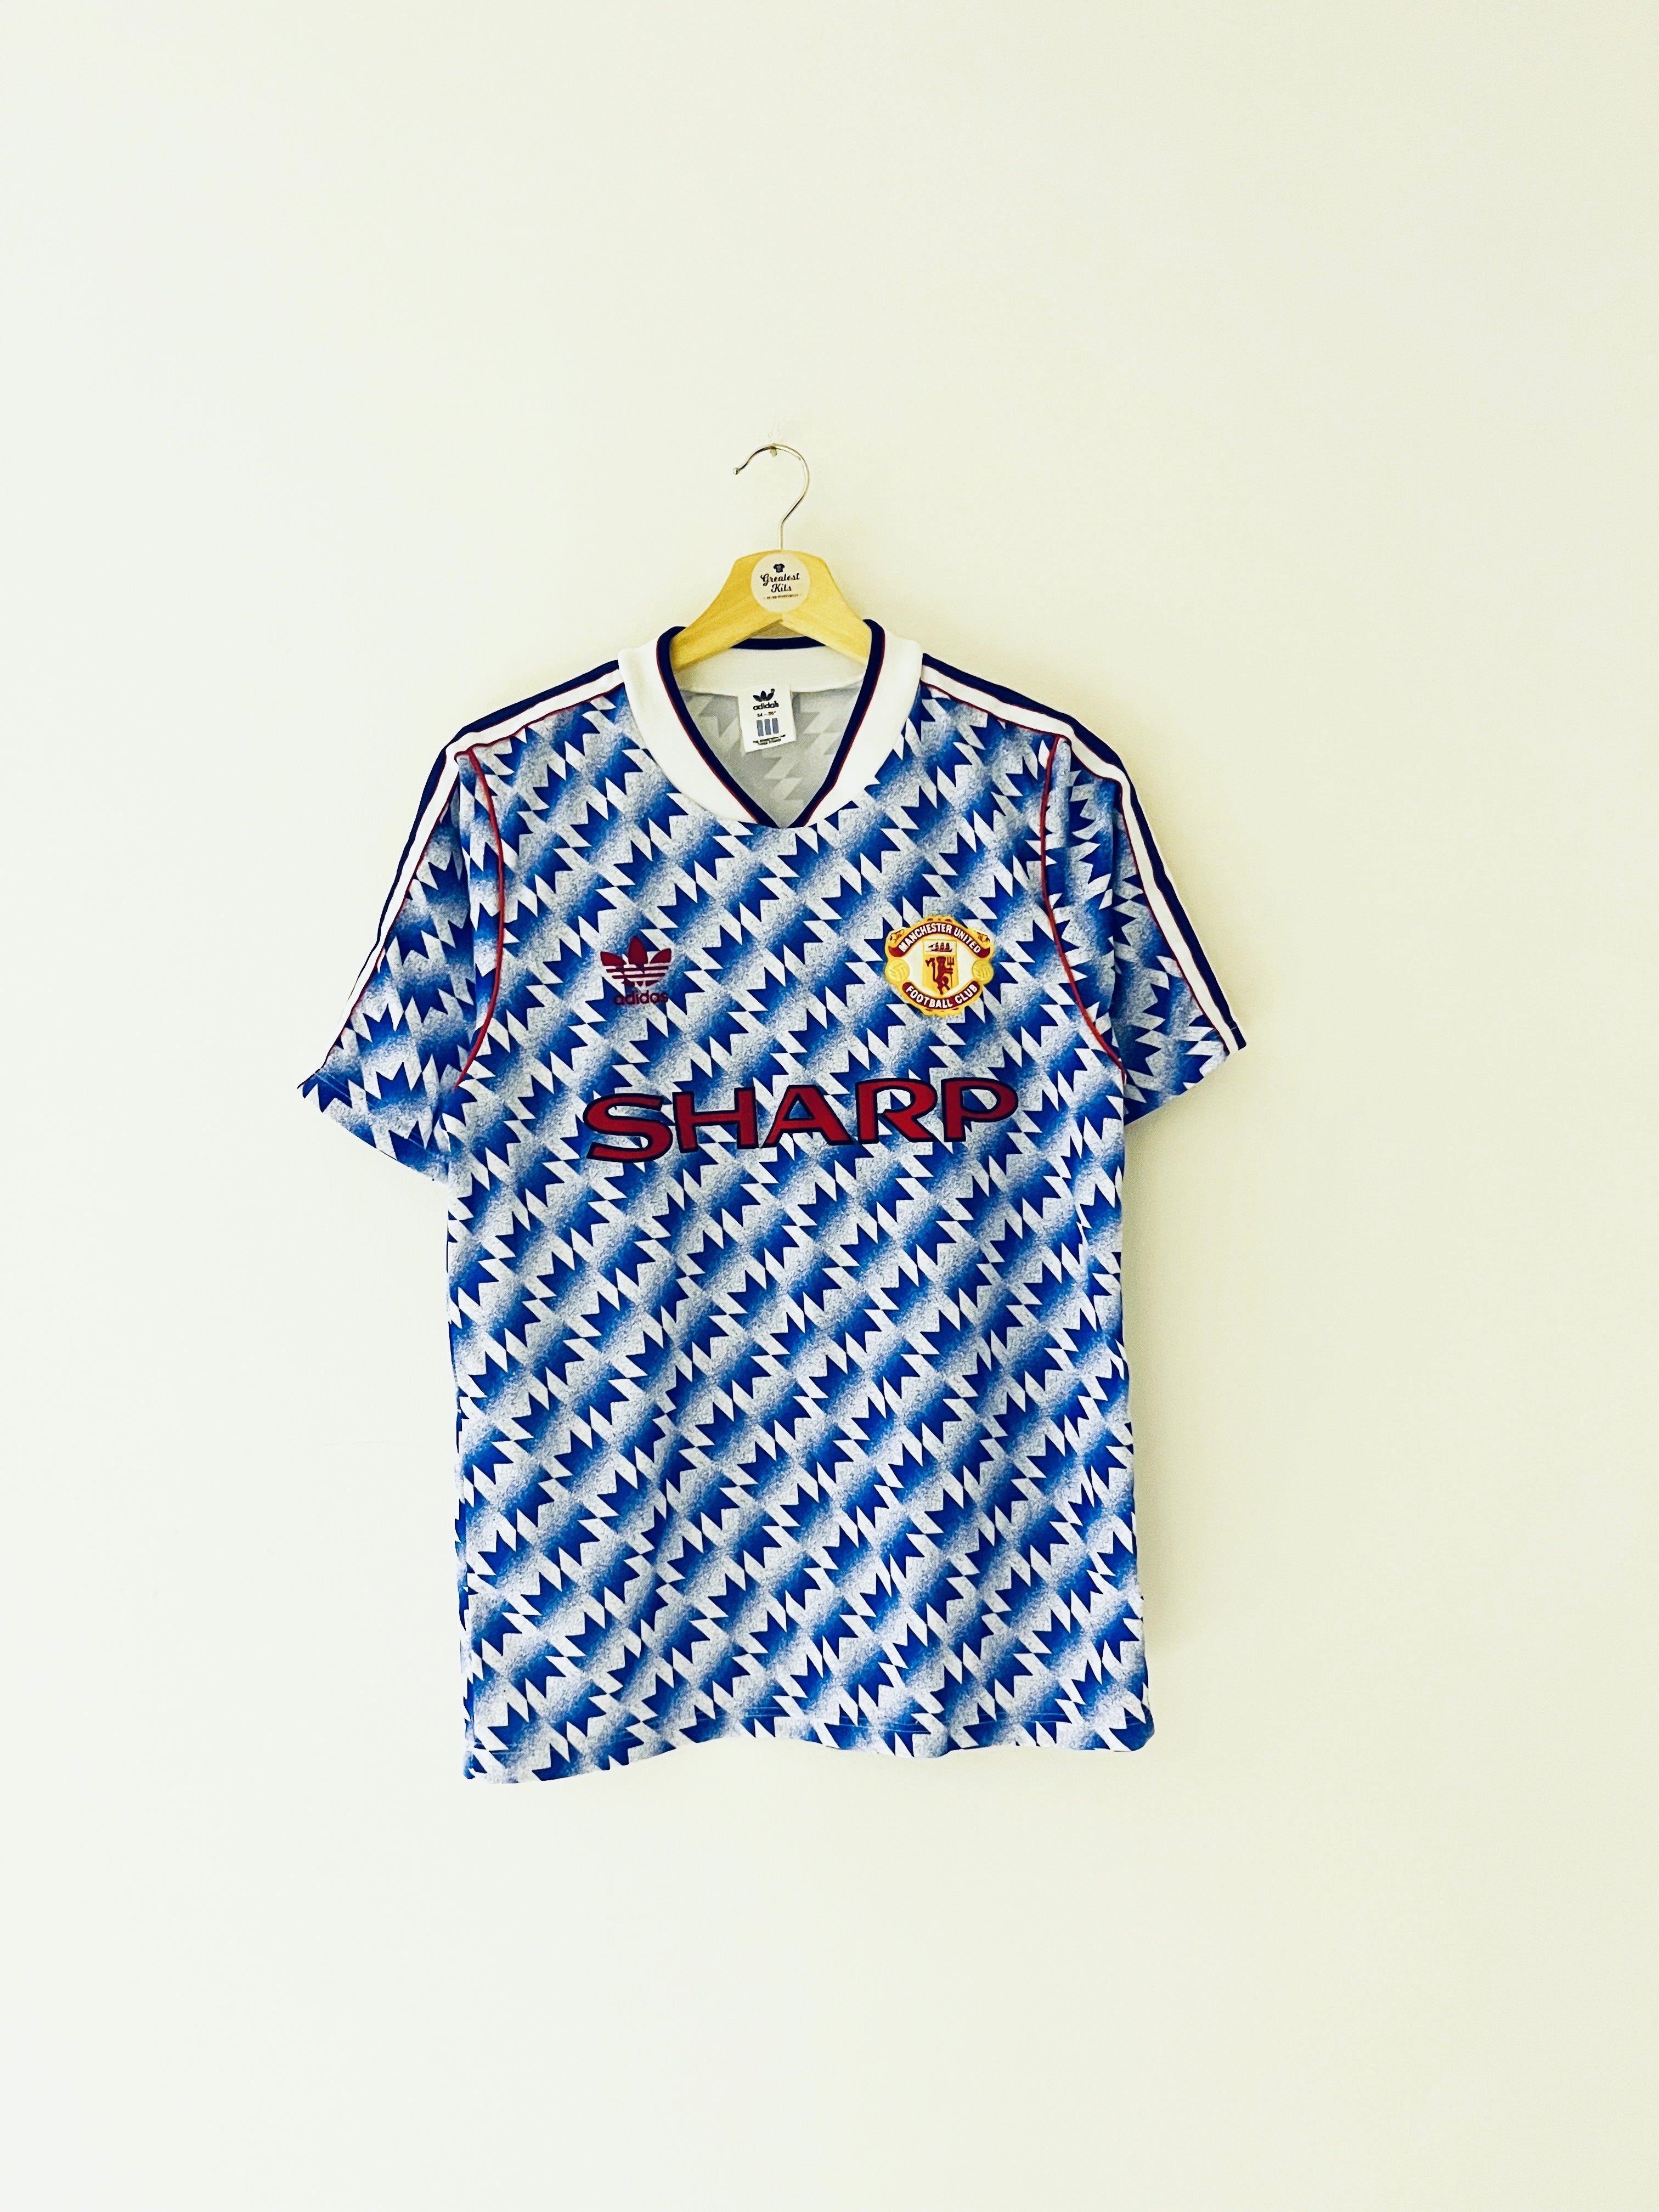 Manchester United 1989-90 Away Kit